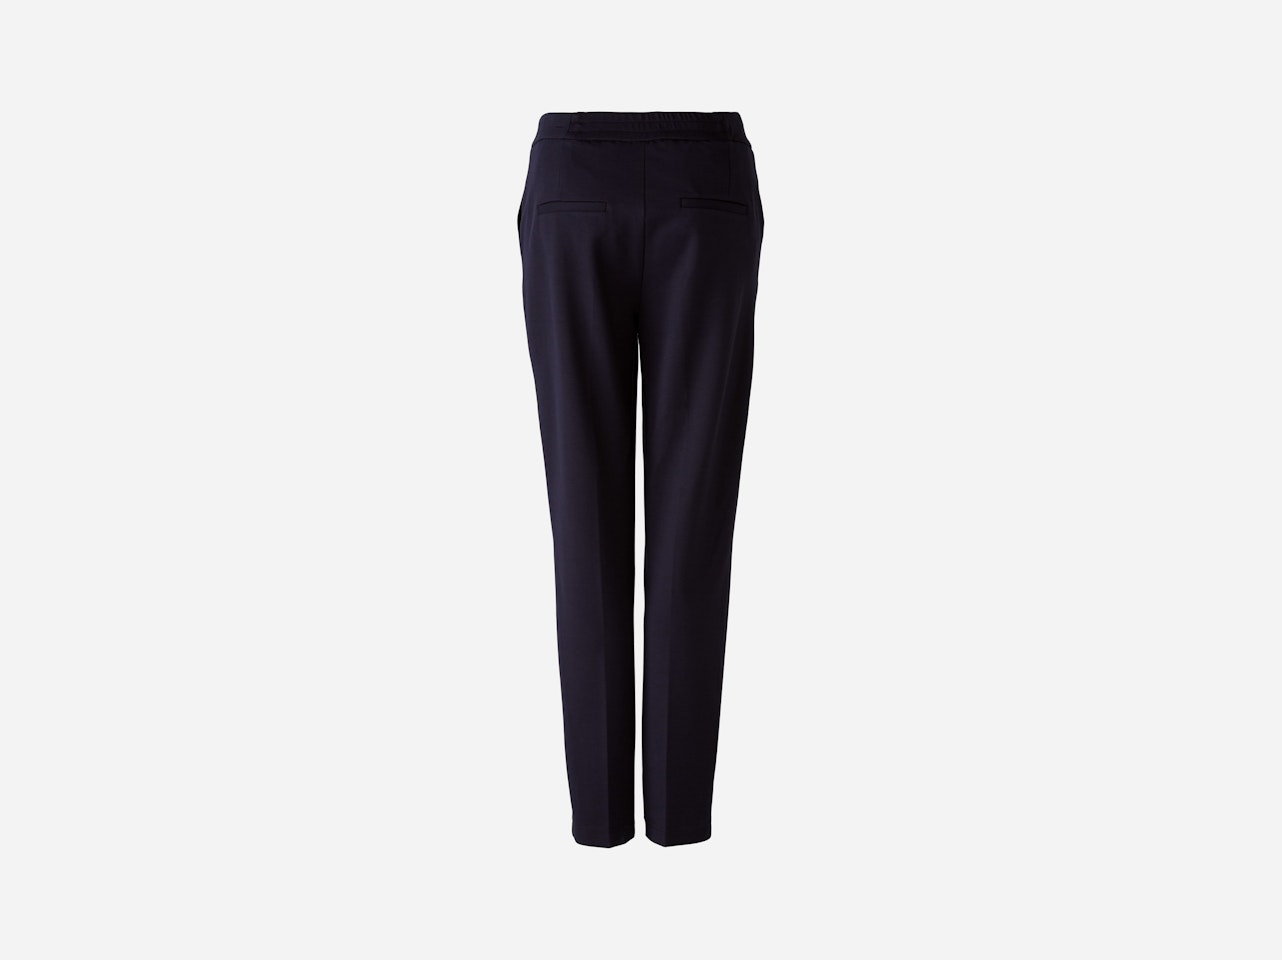 Bild 9 von FEYLIA Jersey trousers slim fit, cropped in darkblue | Oui